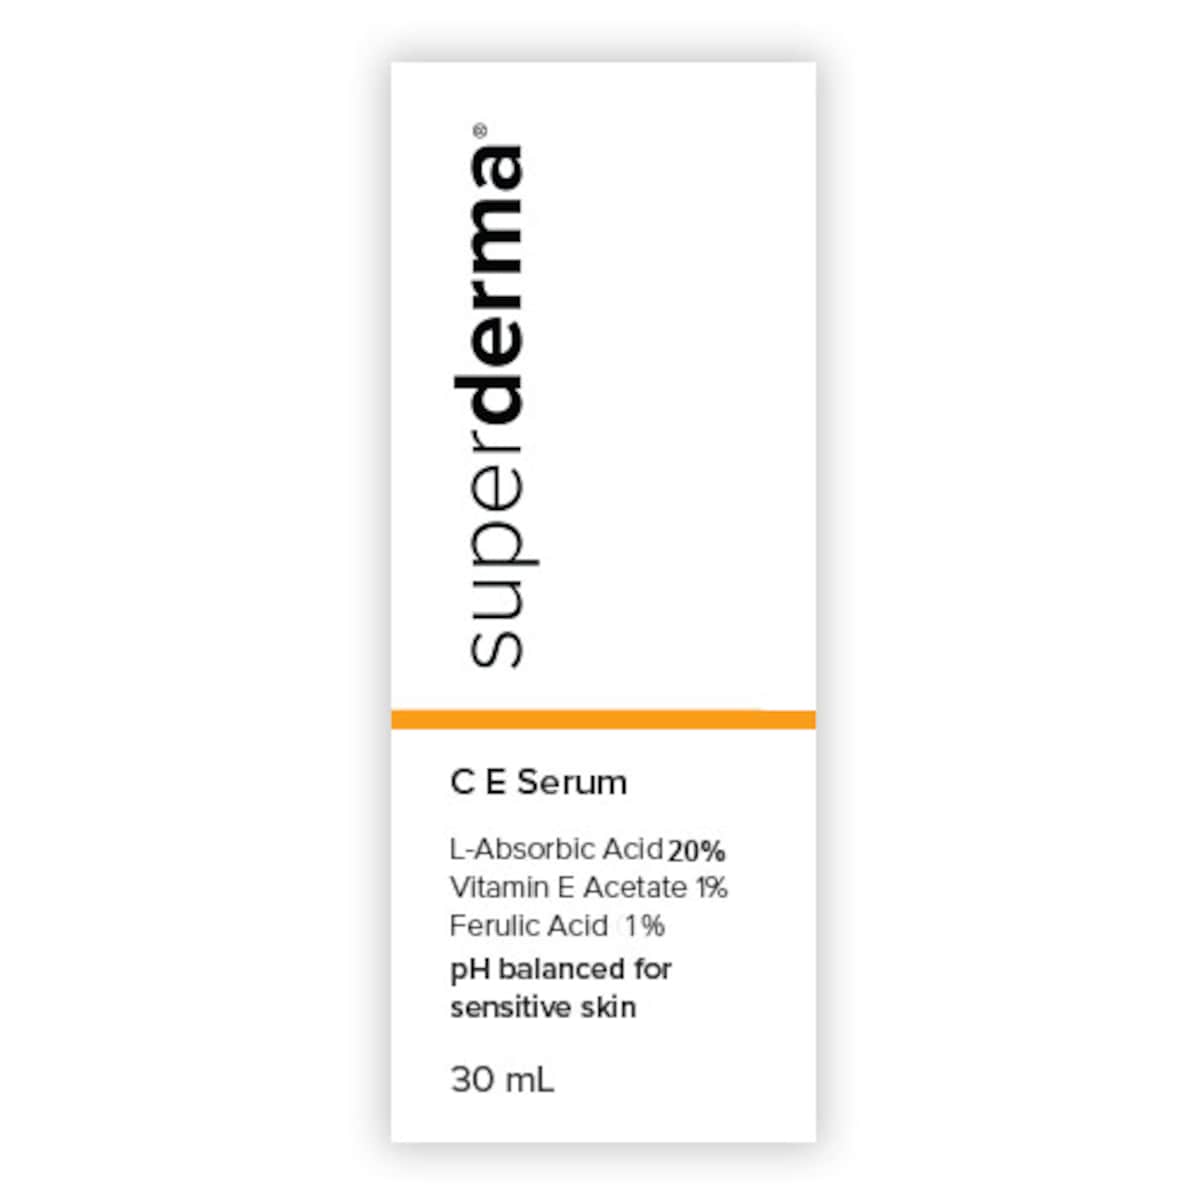 Superderma C E Serum Vitamin C 20% Vitamin E 1% 30mL